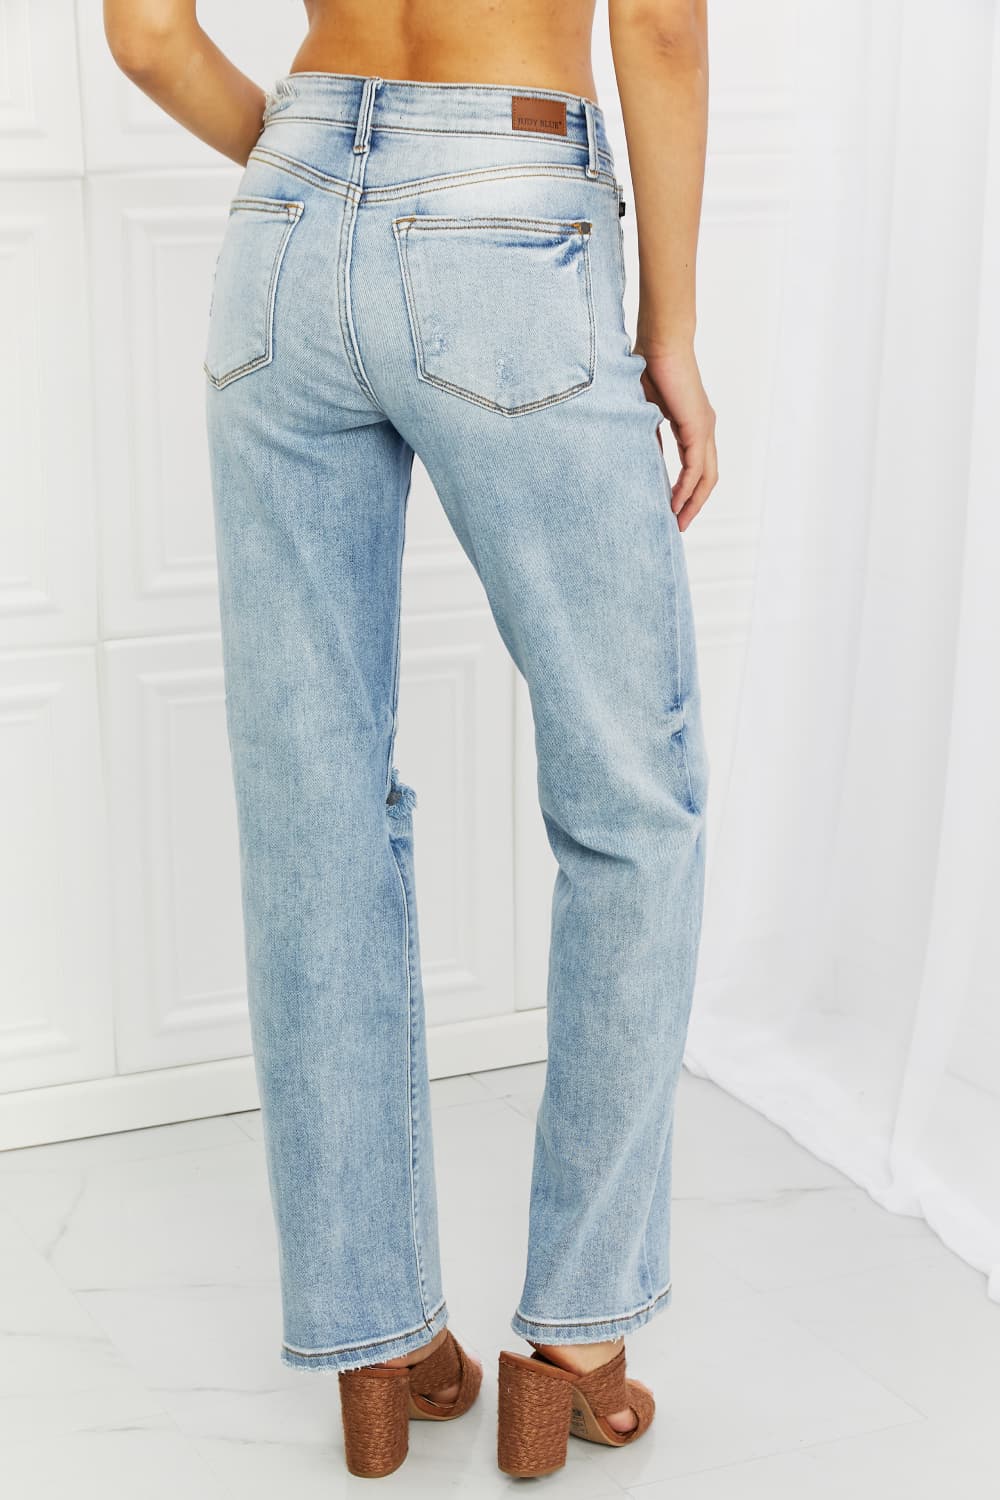 Judy Blue Natalie Full Size Distressed Straight Leg Jeans Jeans JT's Designer Fashion